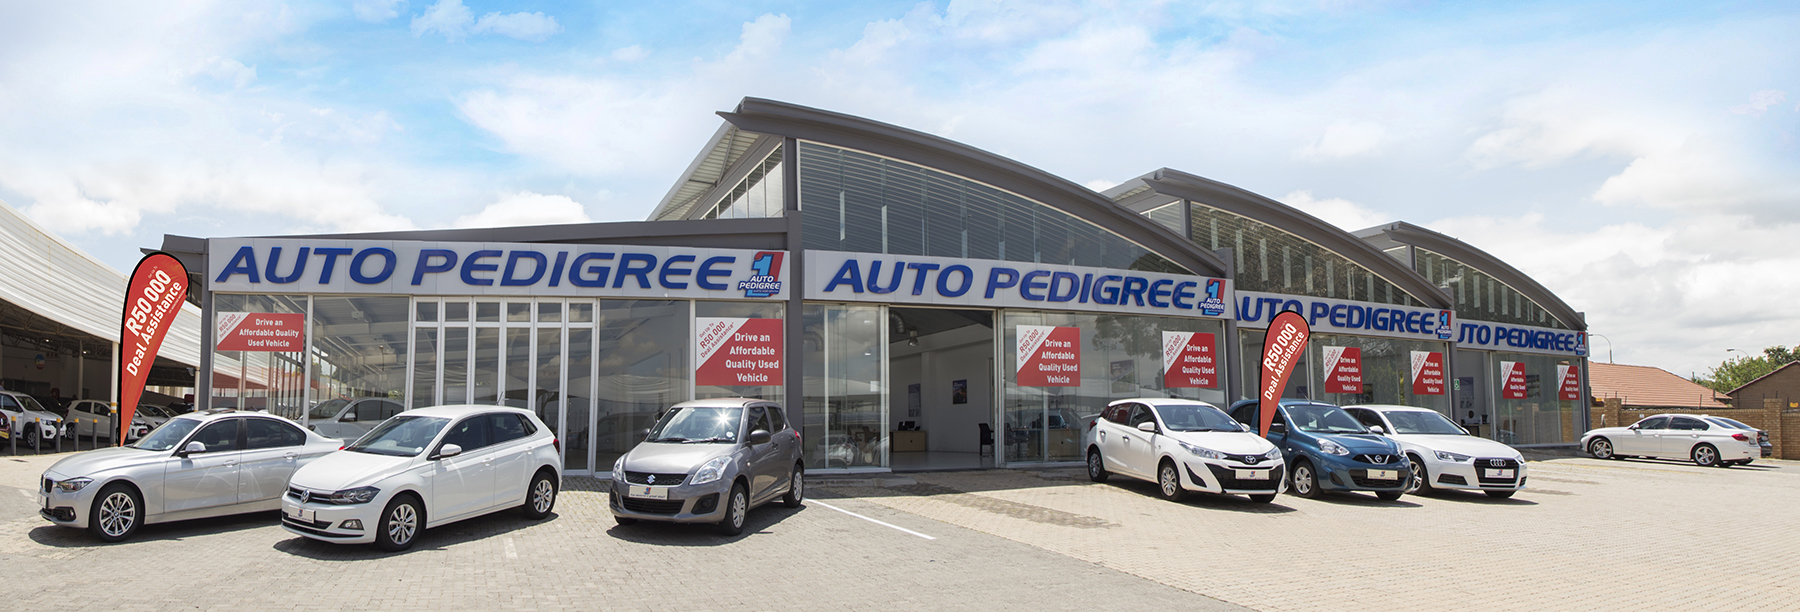 Auto Pedigree West Rand Service Centre